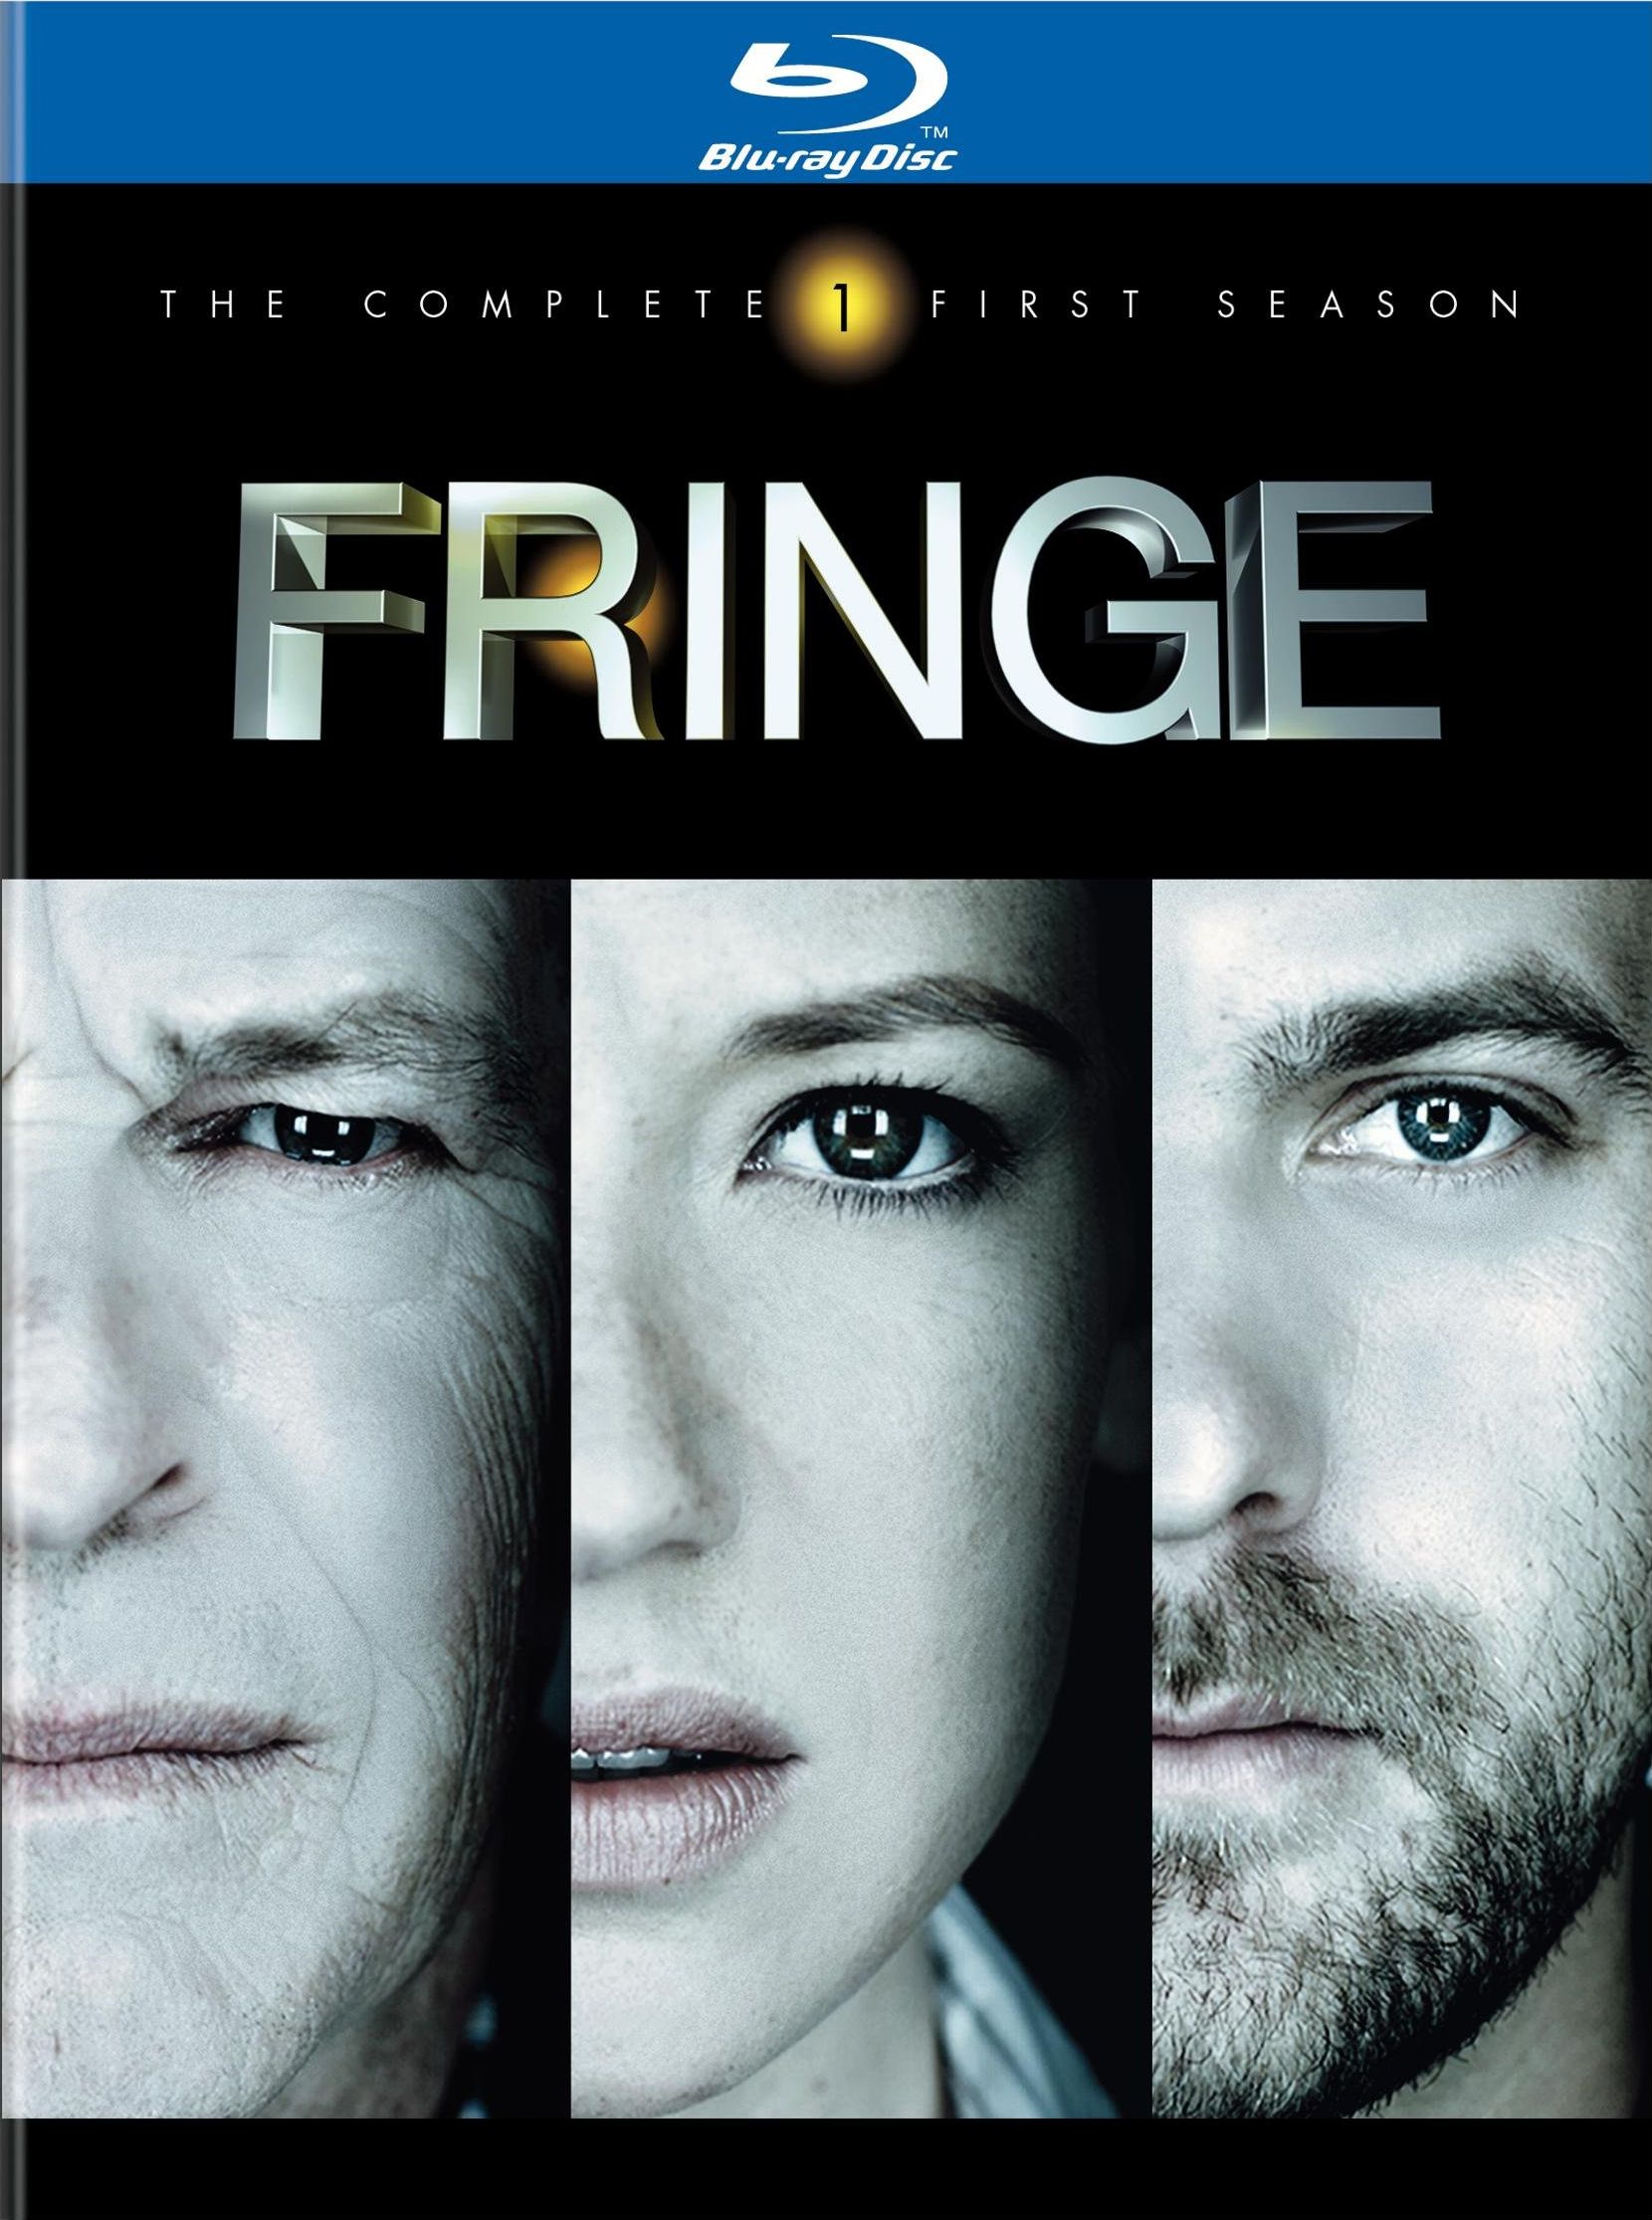 Fringe DVD Release Date